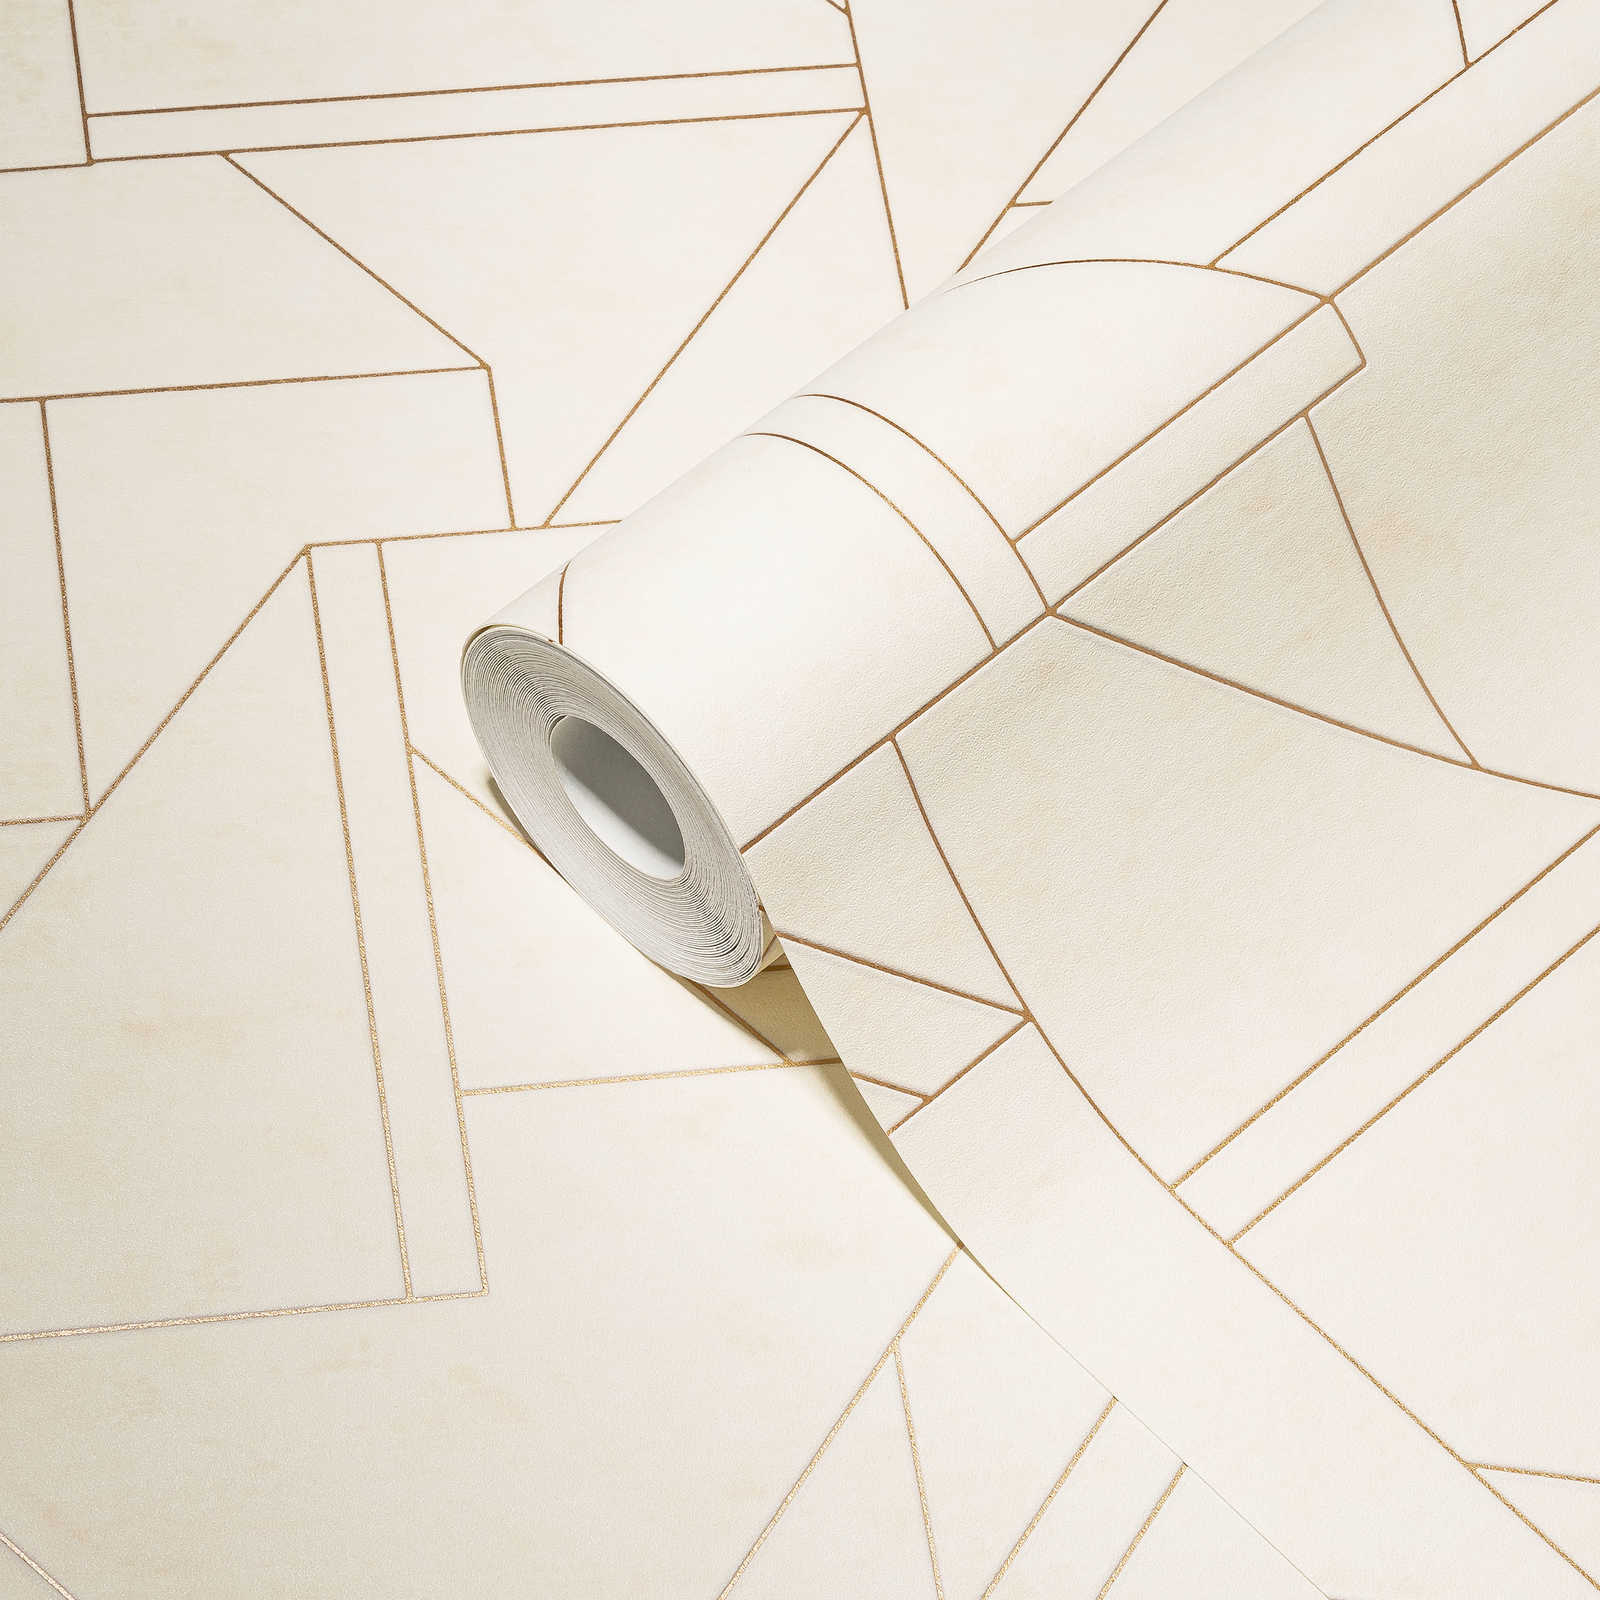             Graphic wallpaper with modern line pattern - white, cream, bronze
        